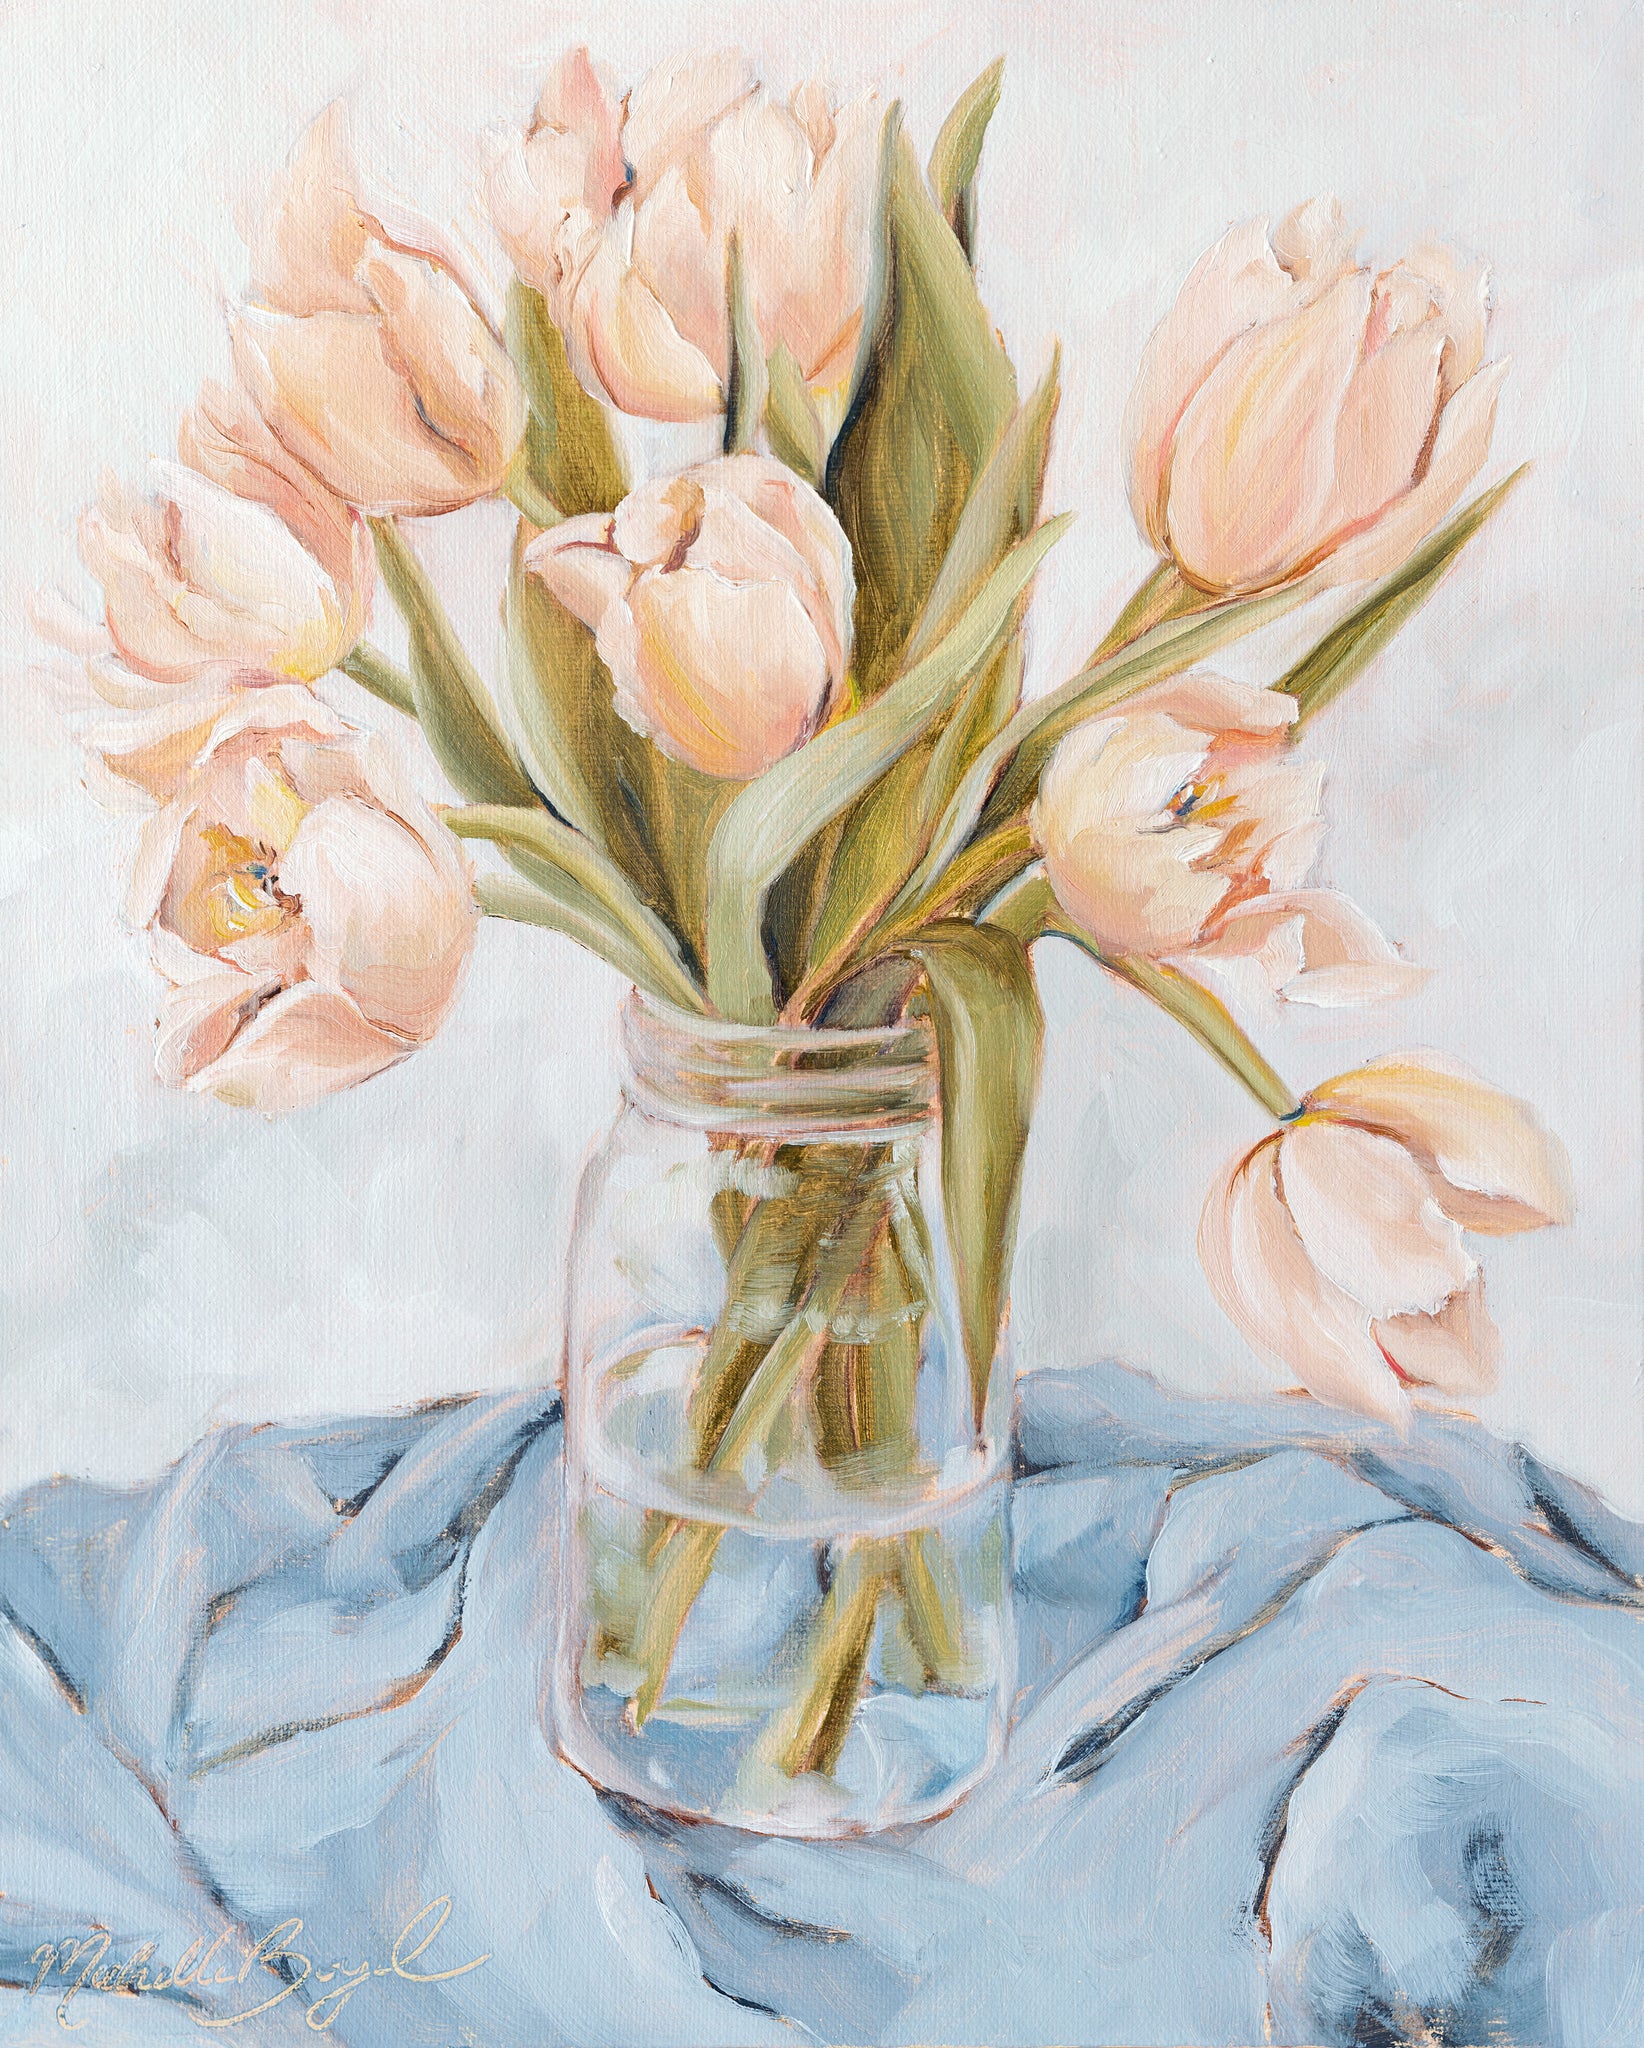 Tulips - 8x10" Framed Oil Painting